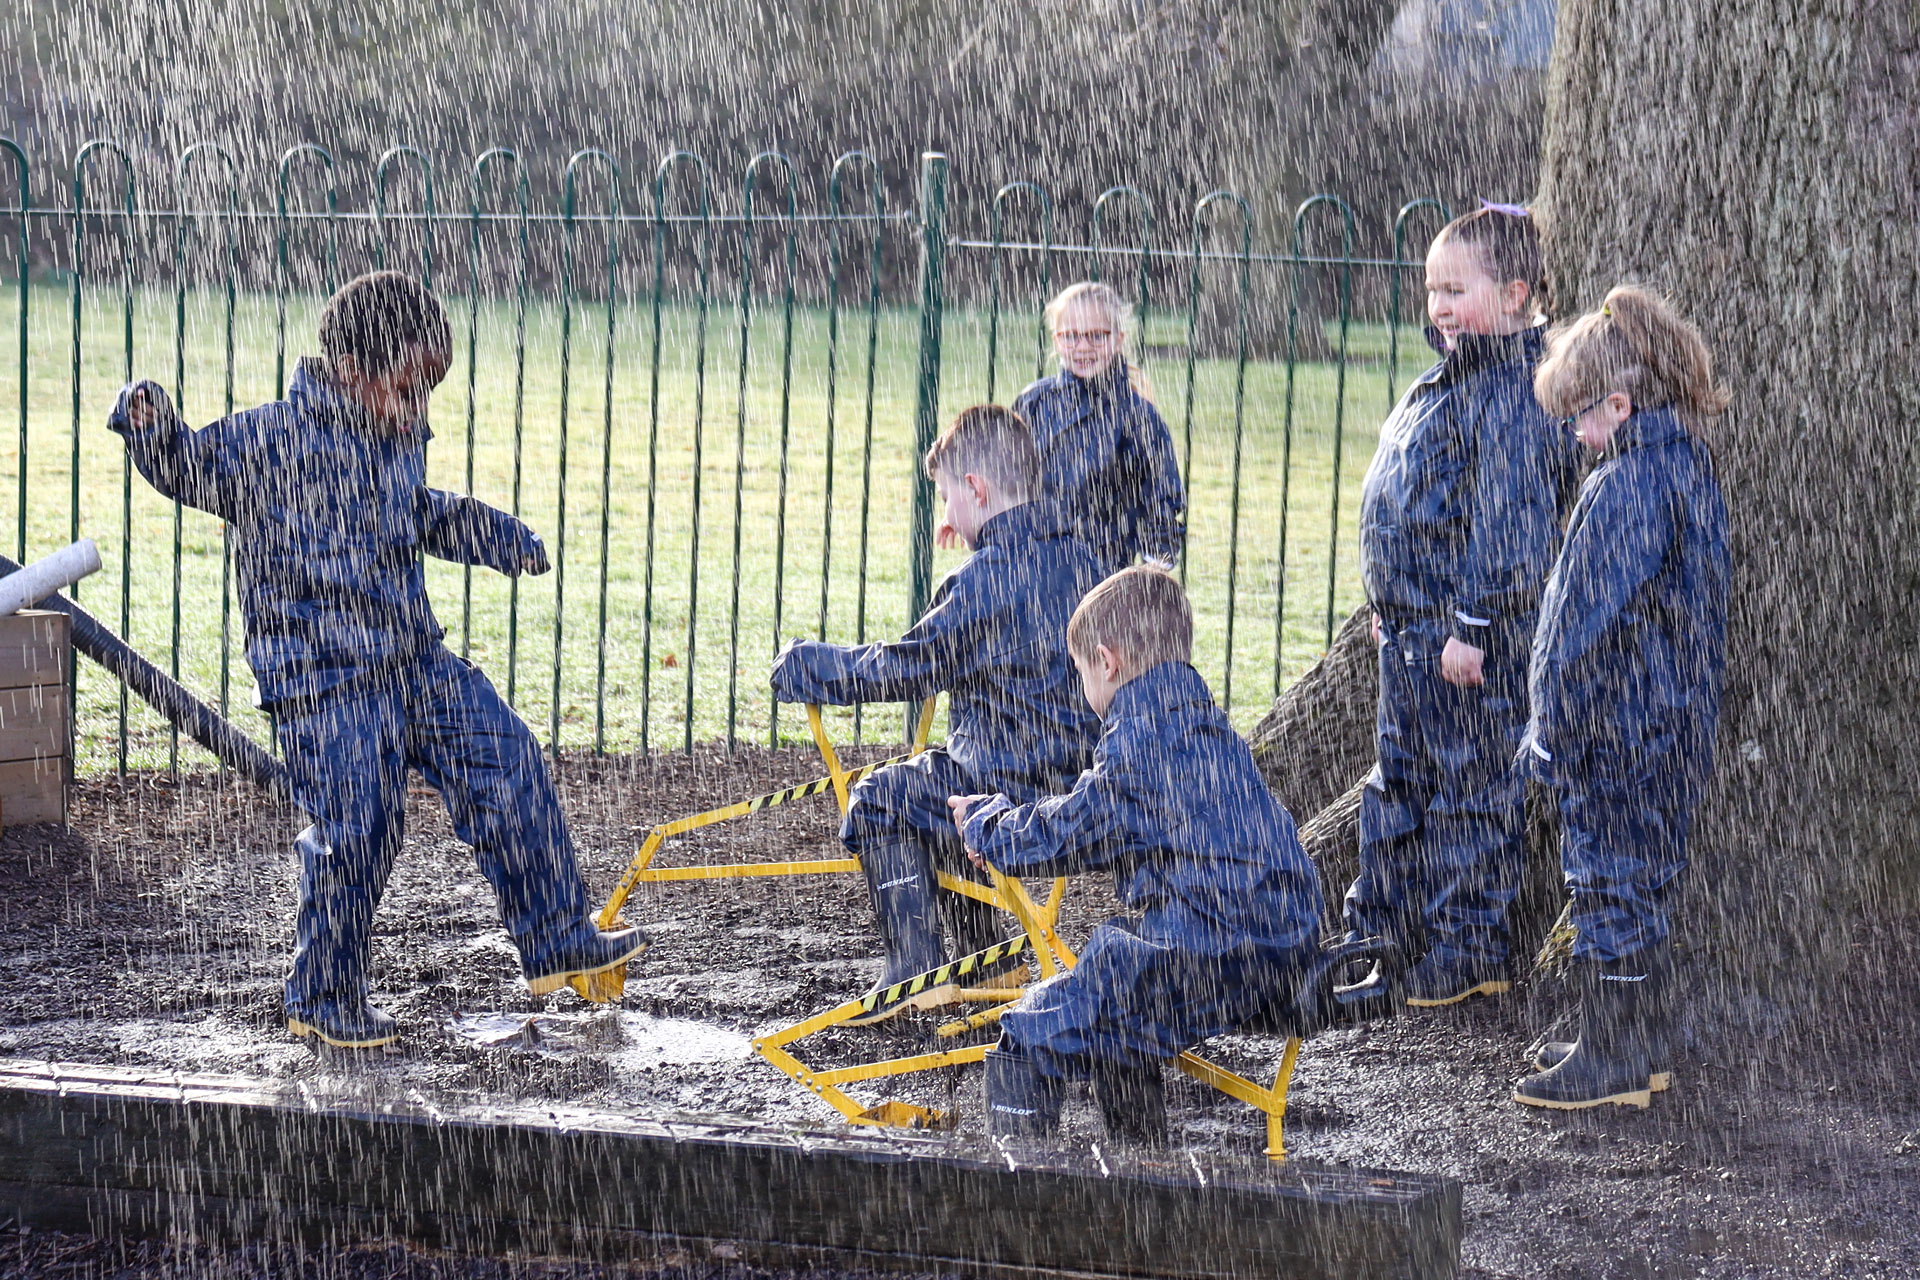 Schoolchildren playing in the rain and mud